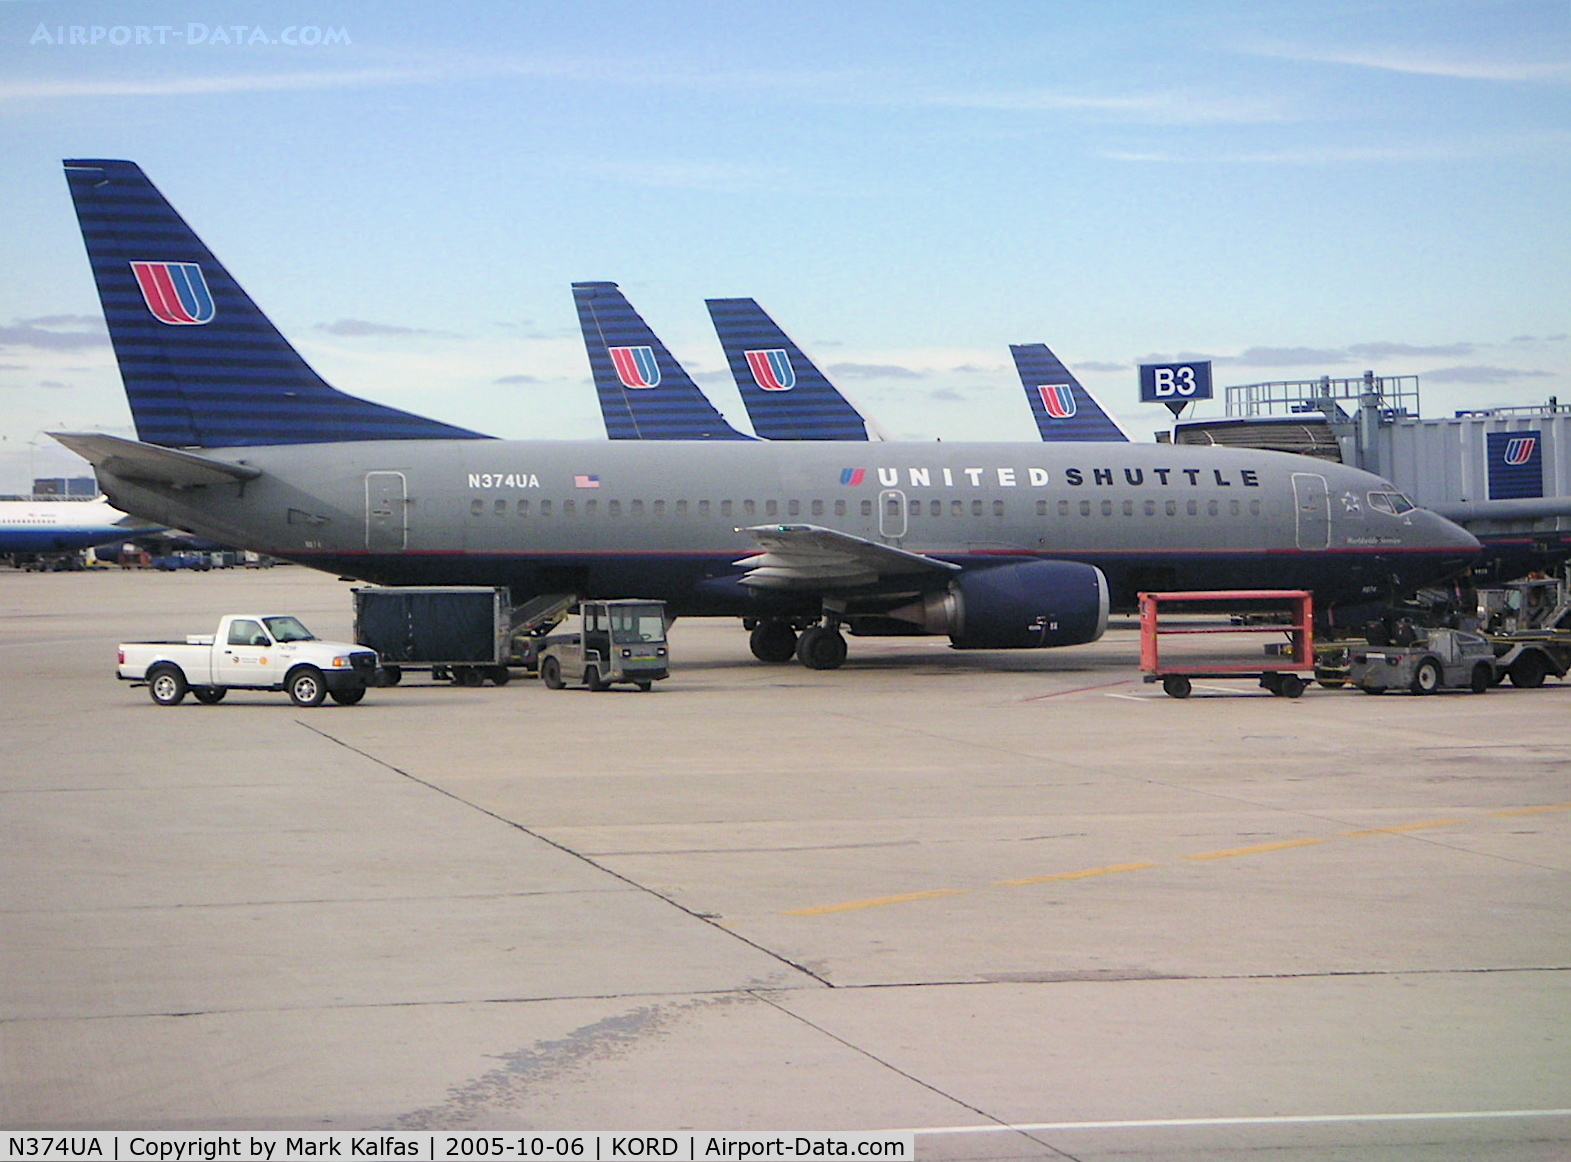 N374UA, 1989 Boeing 737-322 C/N 24639, United Airlines/United Shuttle Boeing 737-322, N374UA parked at gate B3.